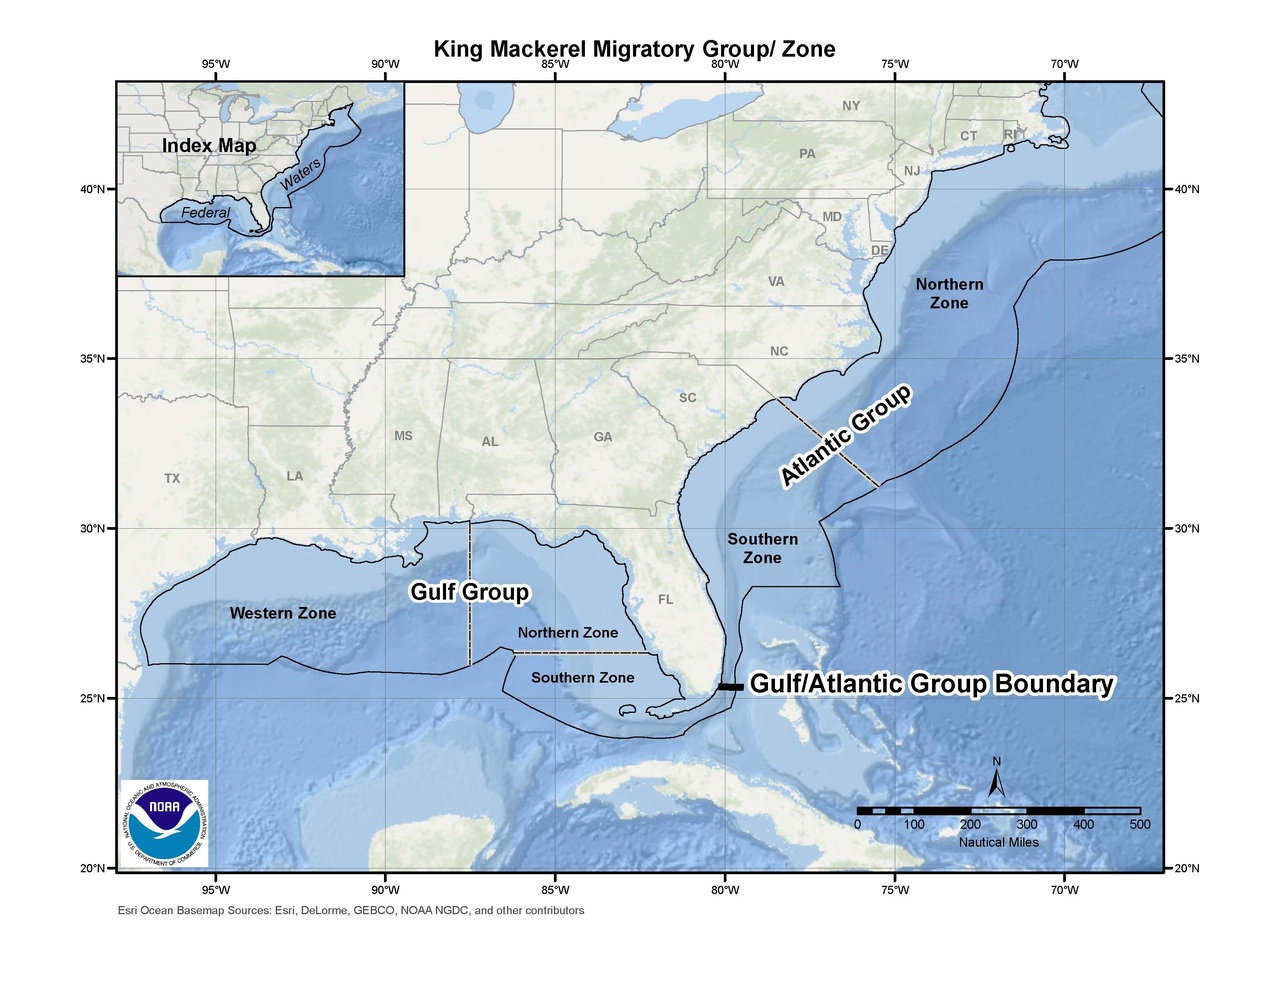 Image: King Mackerel Migratory Group Zones Fishery Management Areas Map & GIS Data